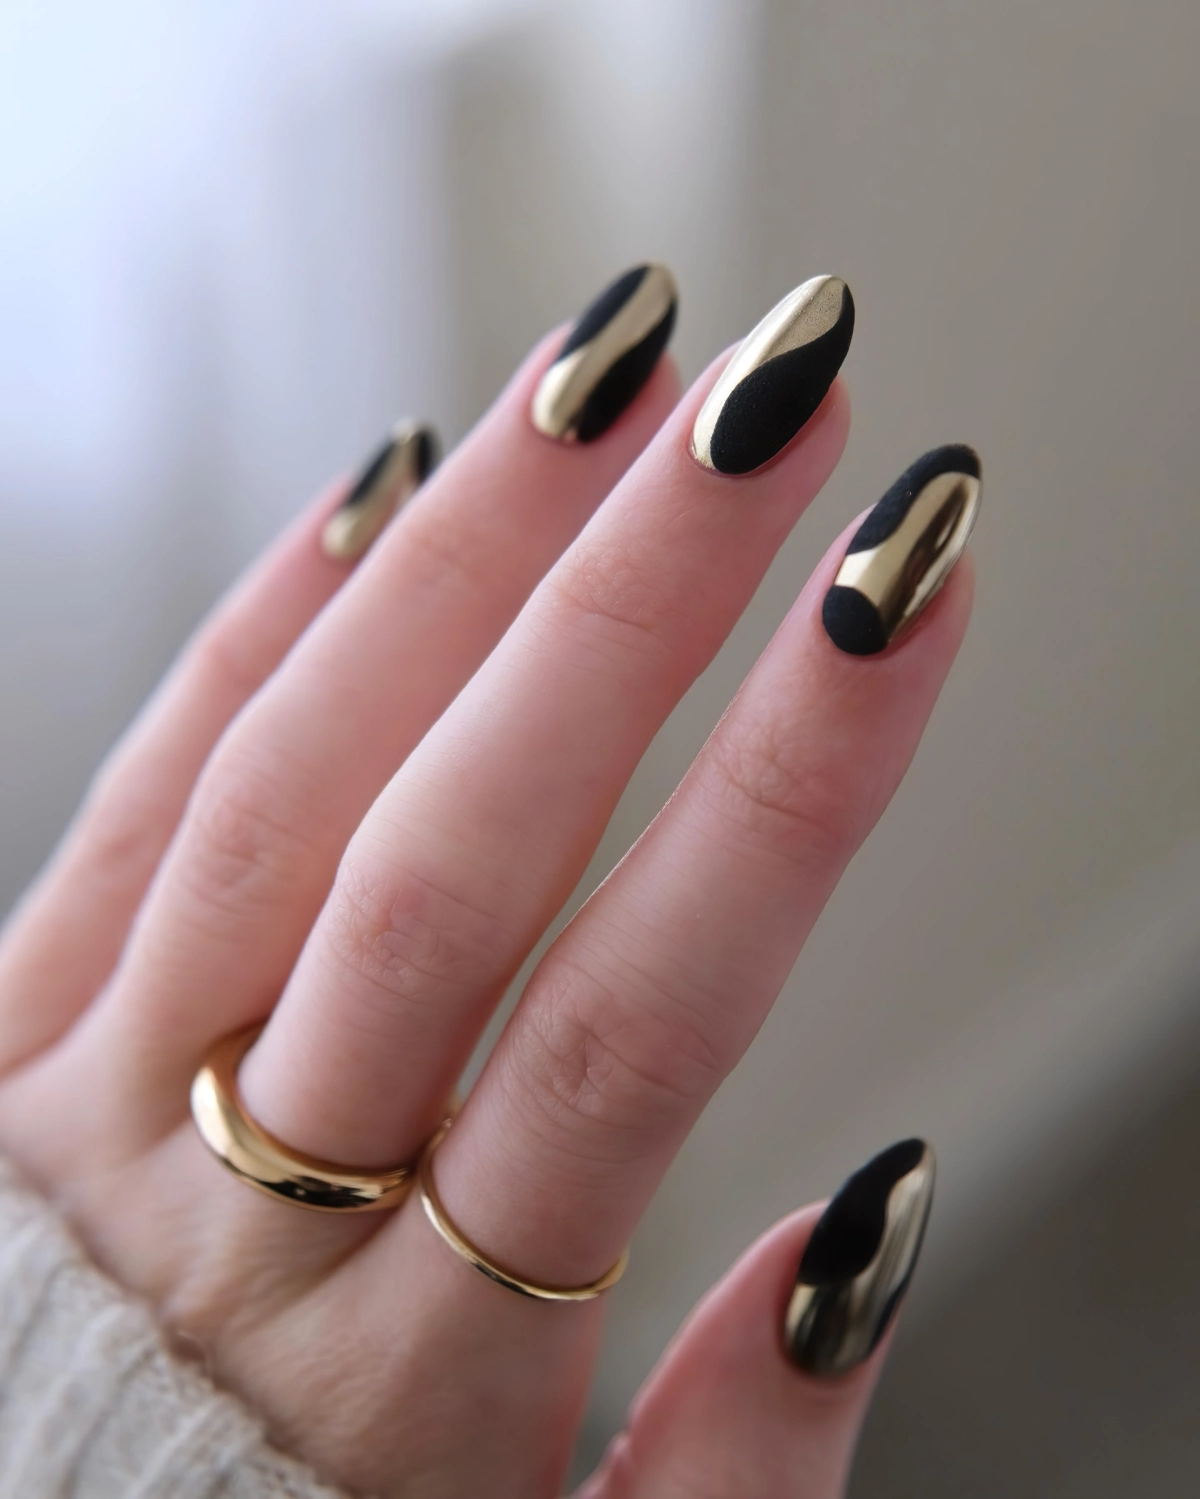 nail art noir et or ongles mat finition dessin or metallique bagues pull